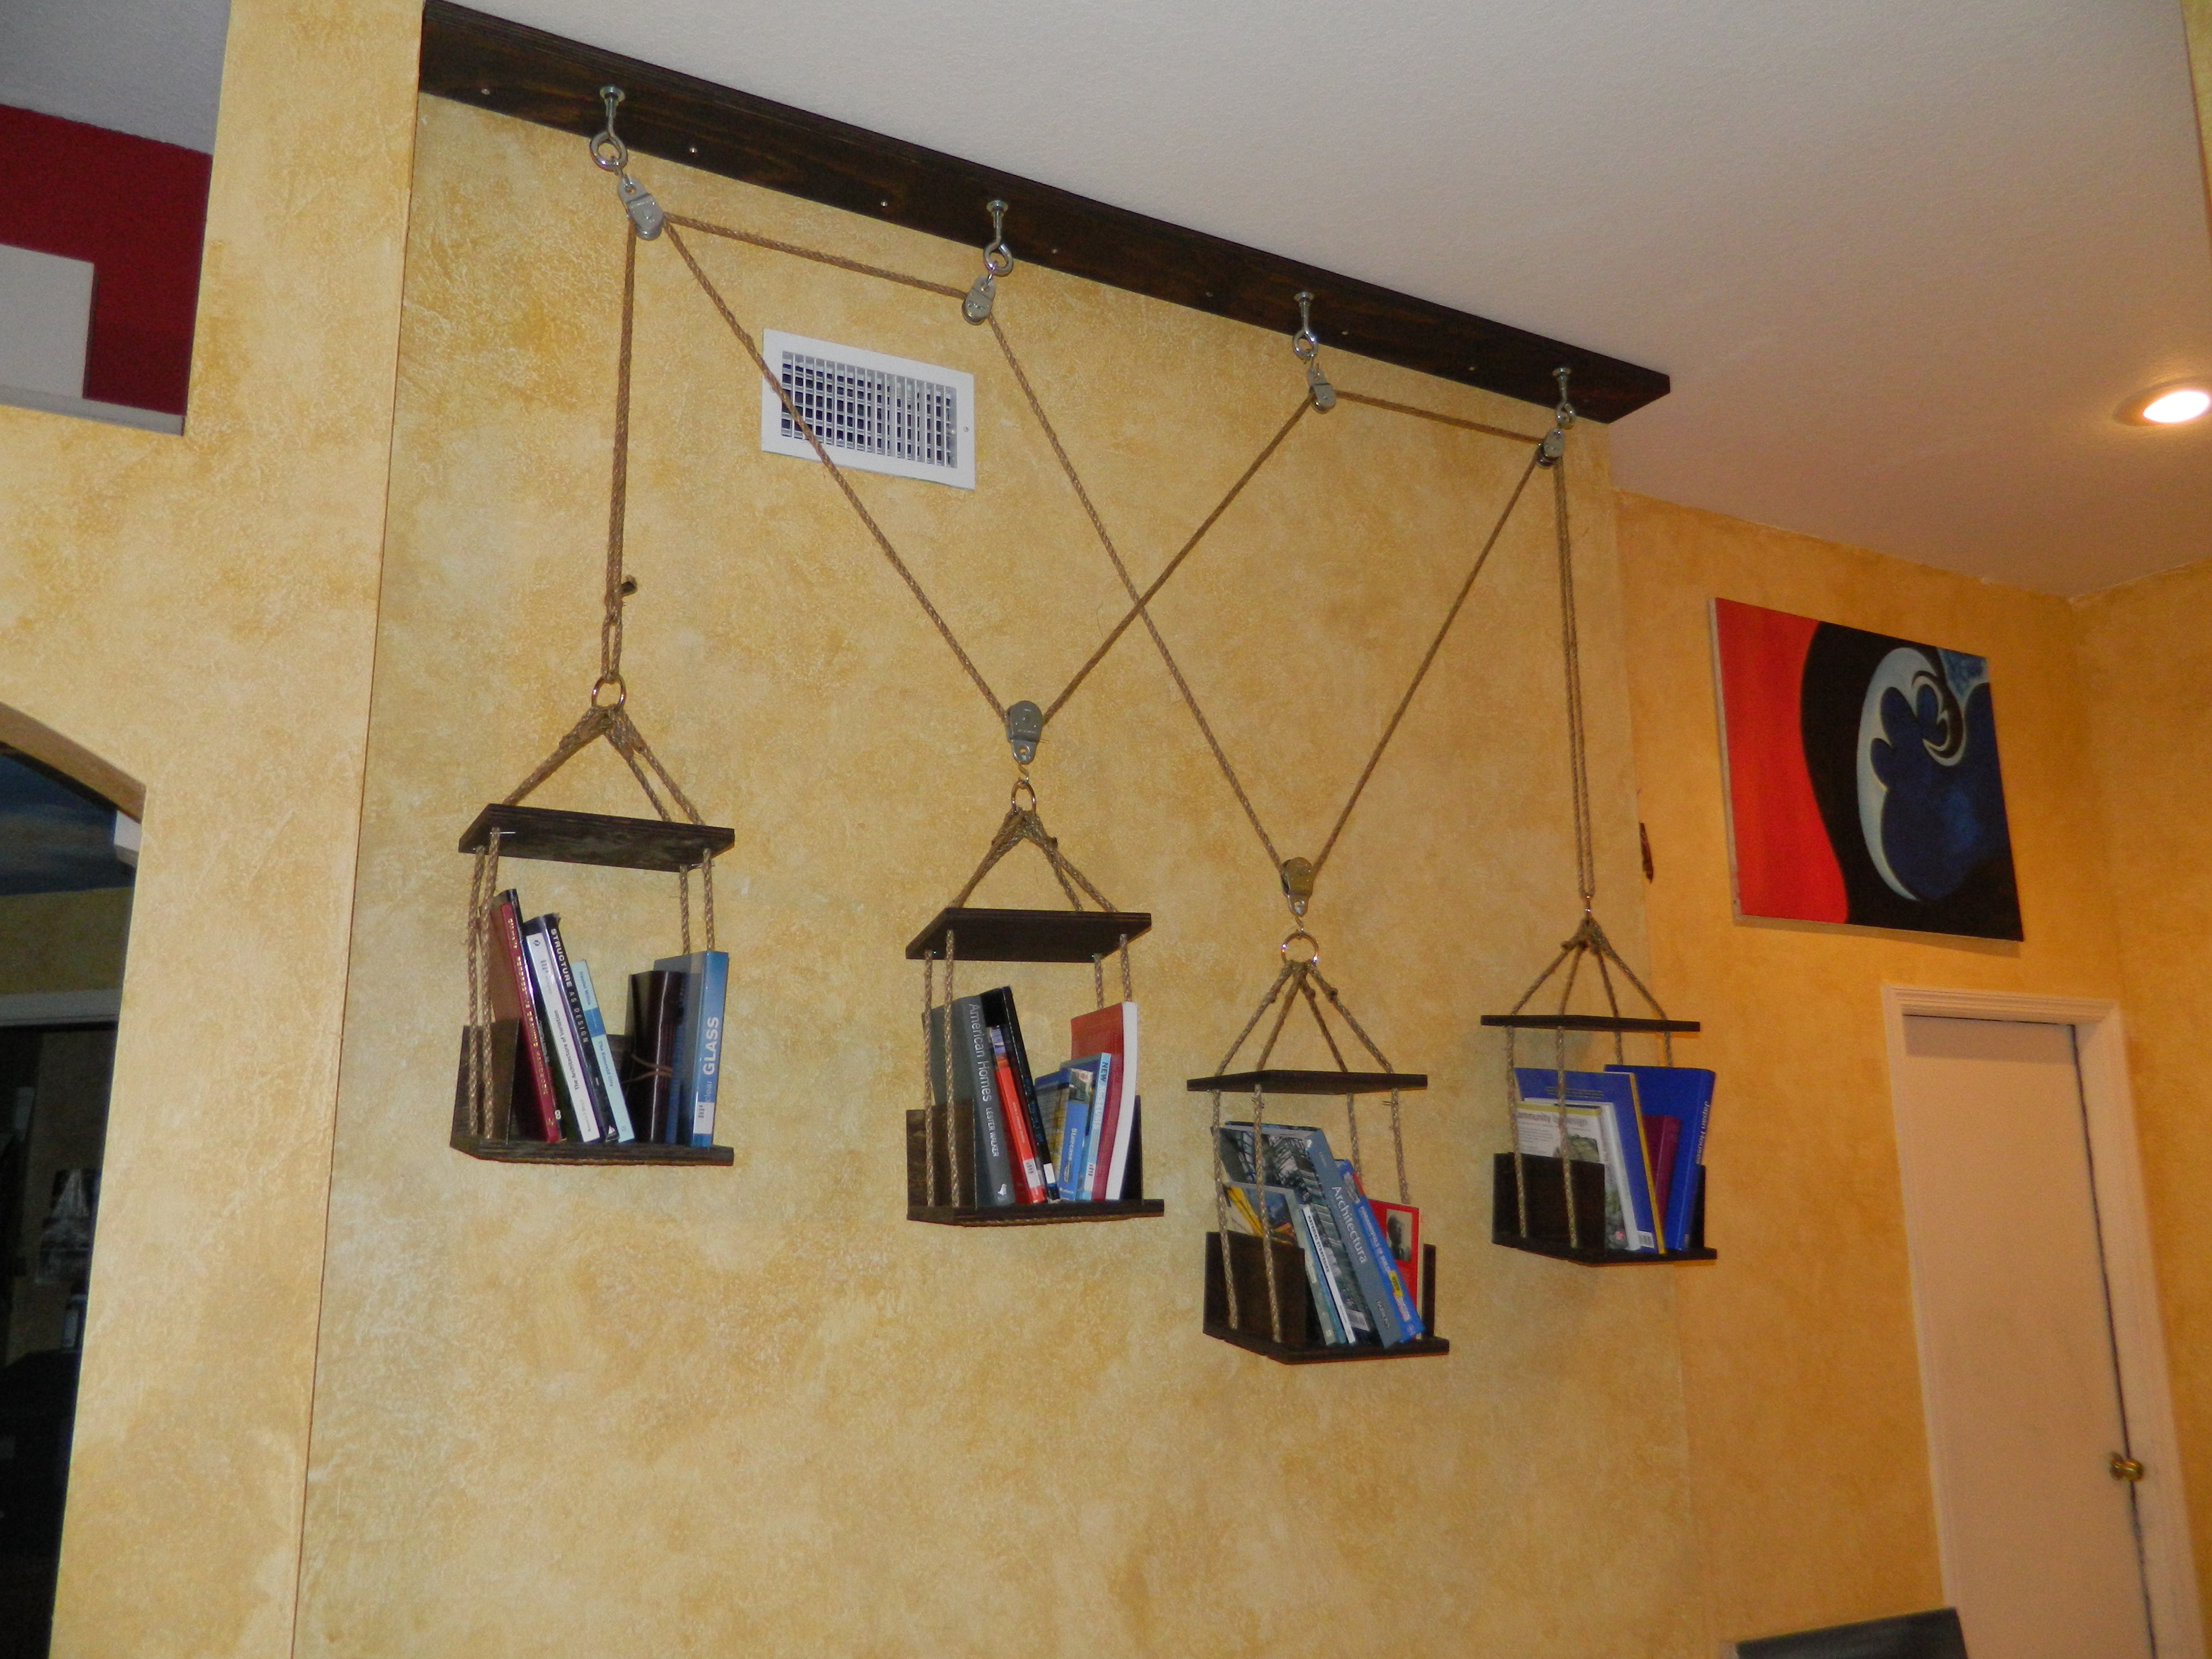 Hanging / Moving Book Shelves